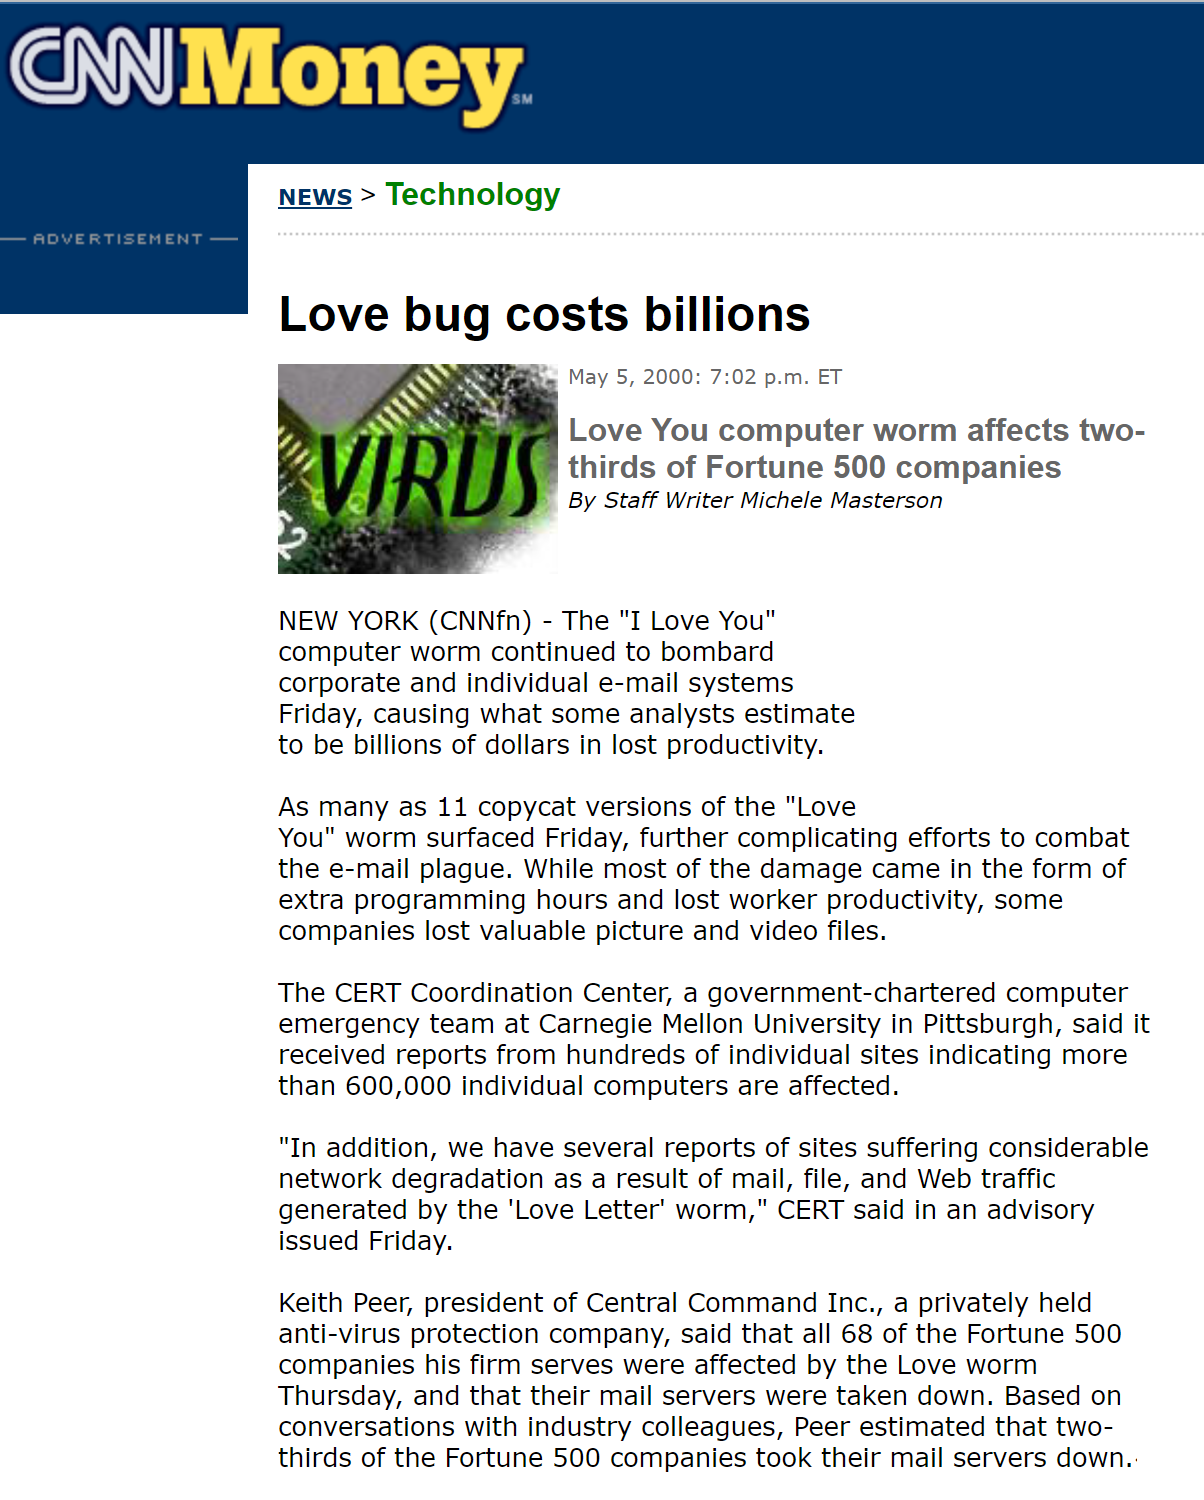 CNN Money "Love bug costs billions"